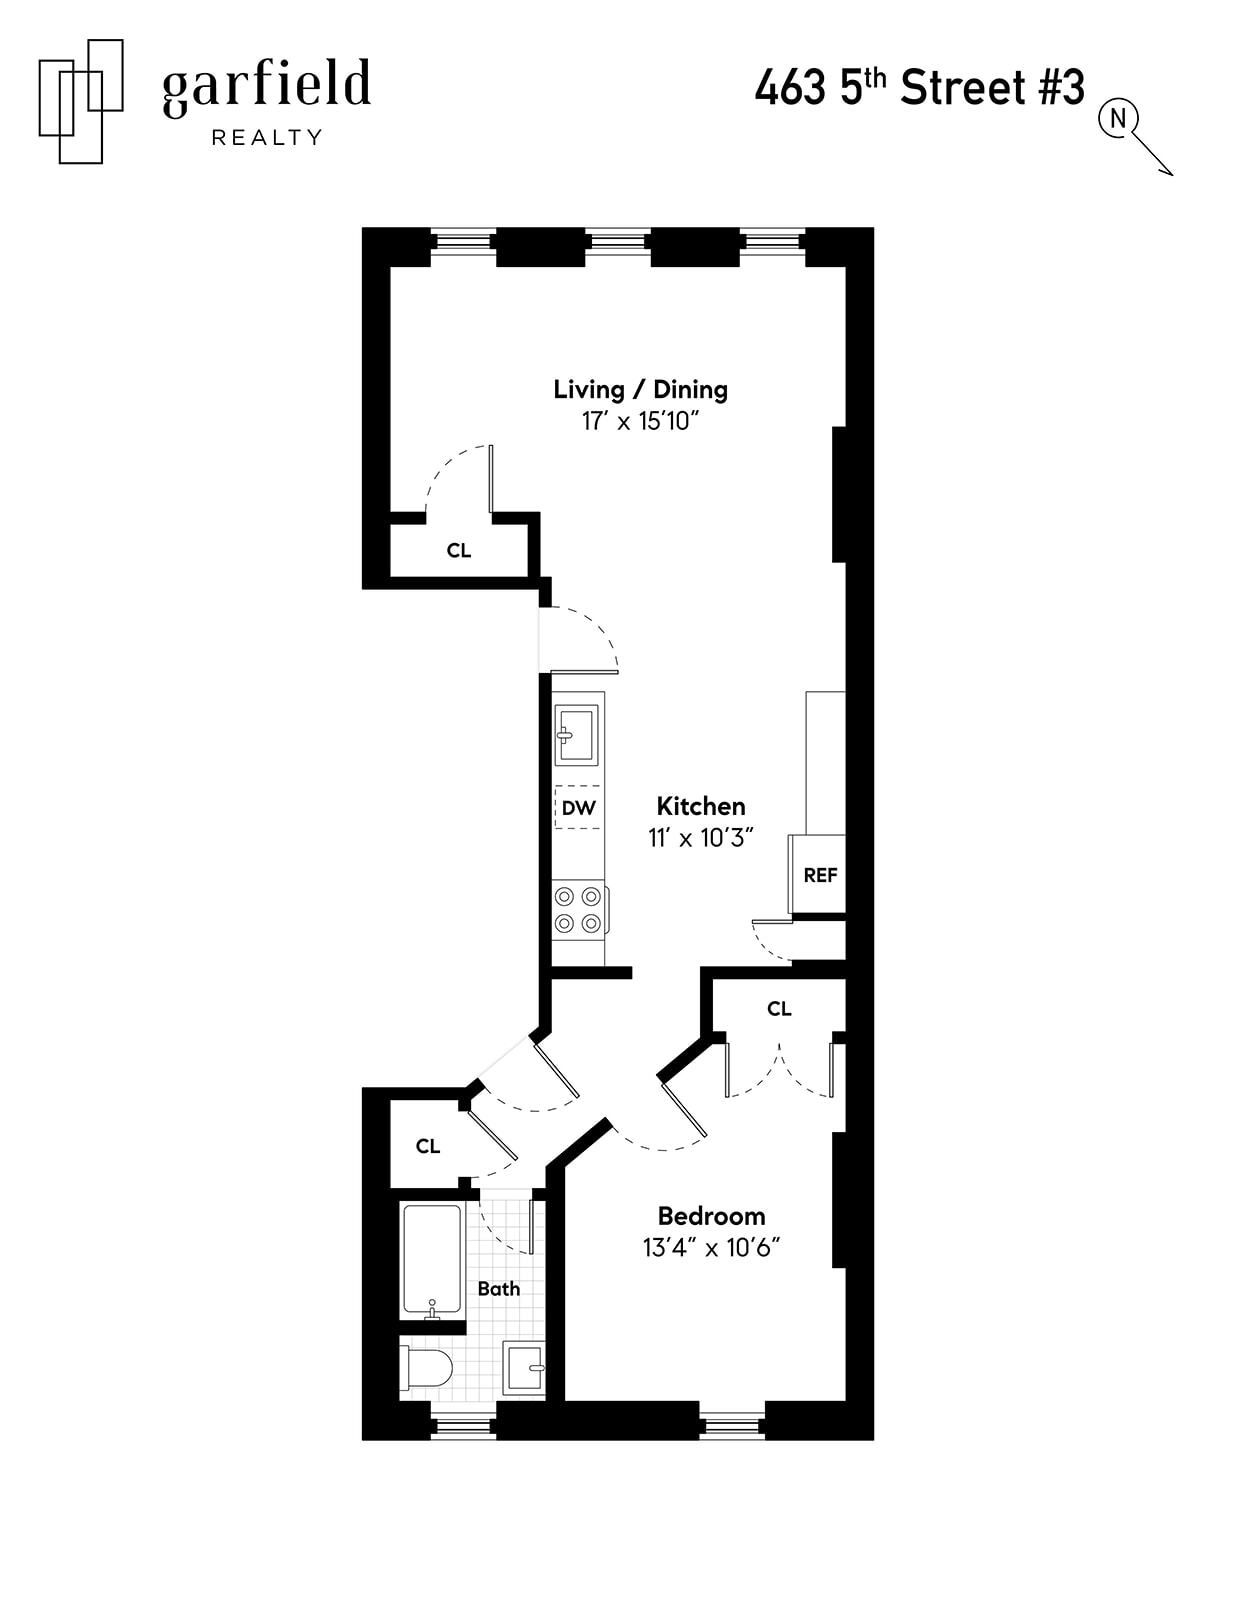 Floorplan of 463 5th St